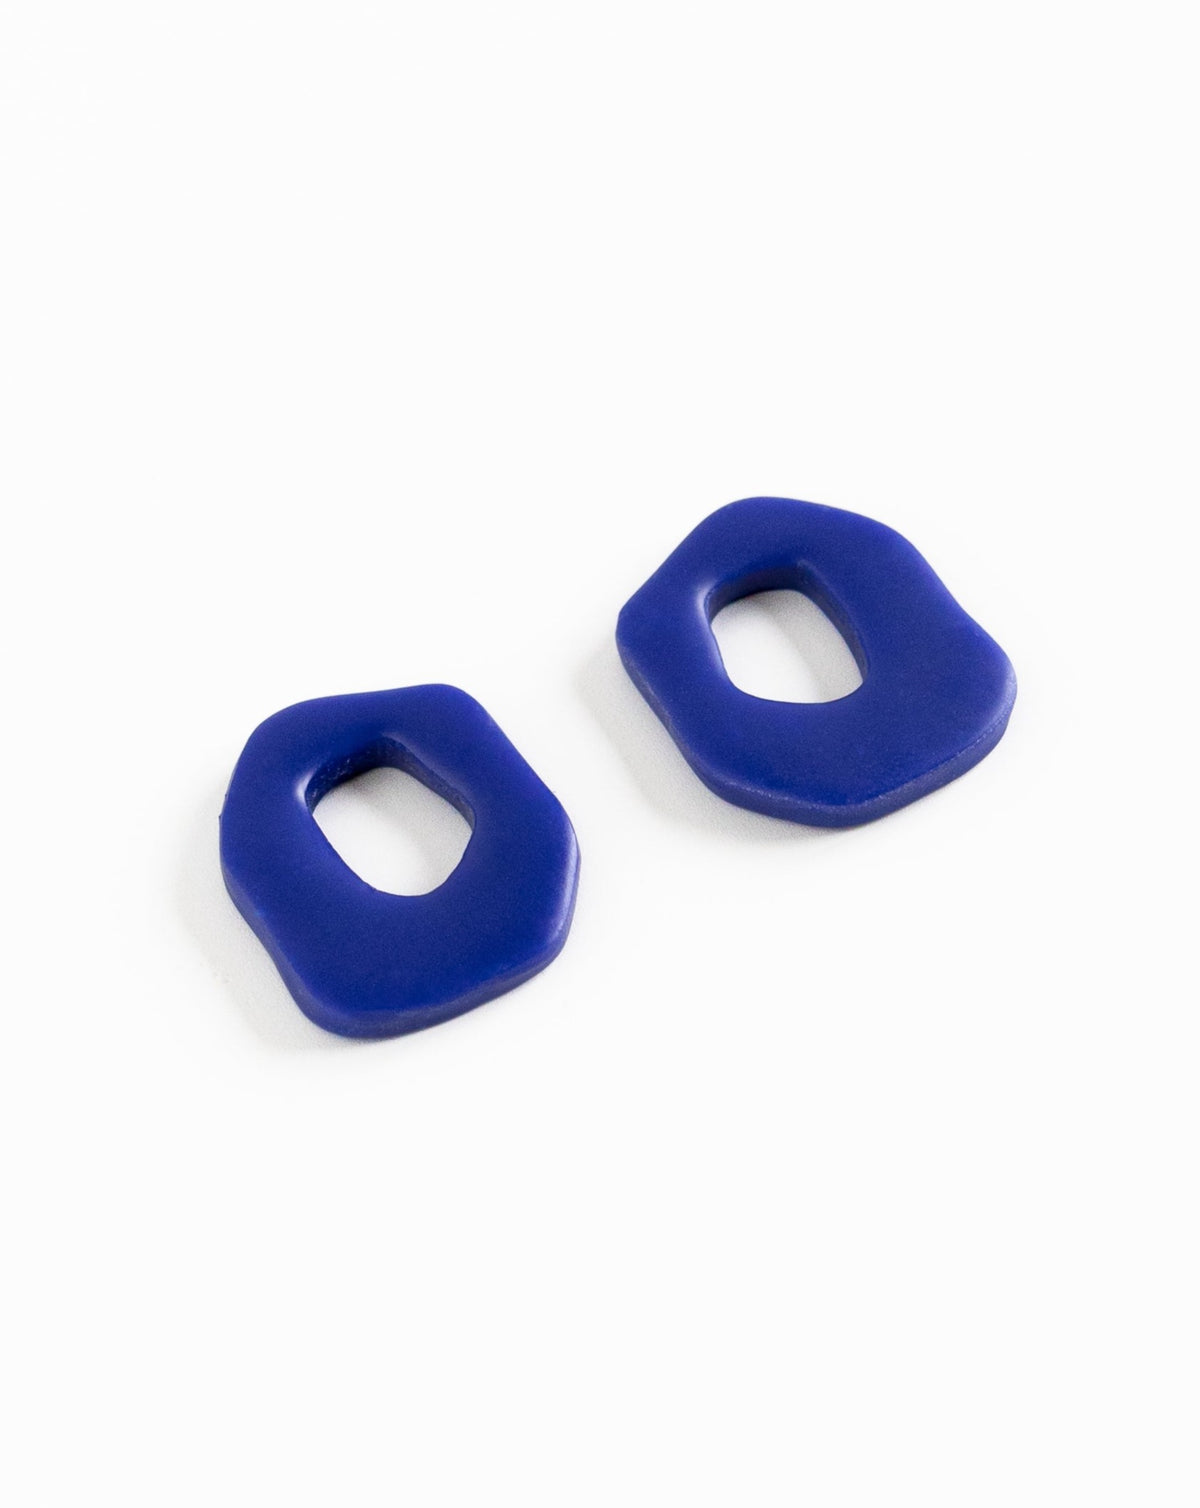 Darien Beads in Hue Blue color, side view